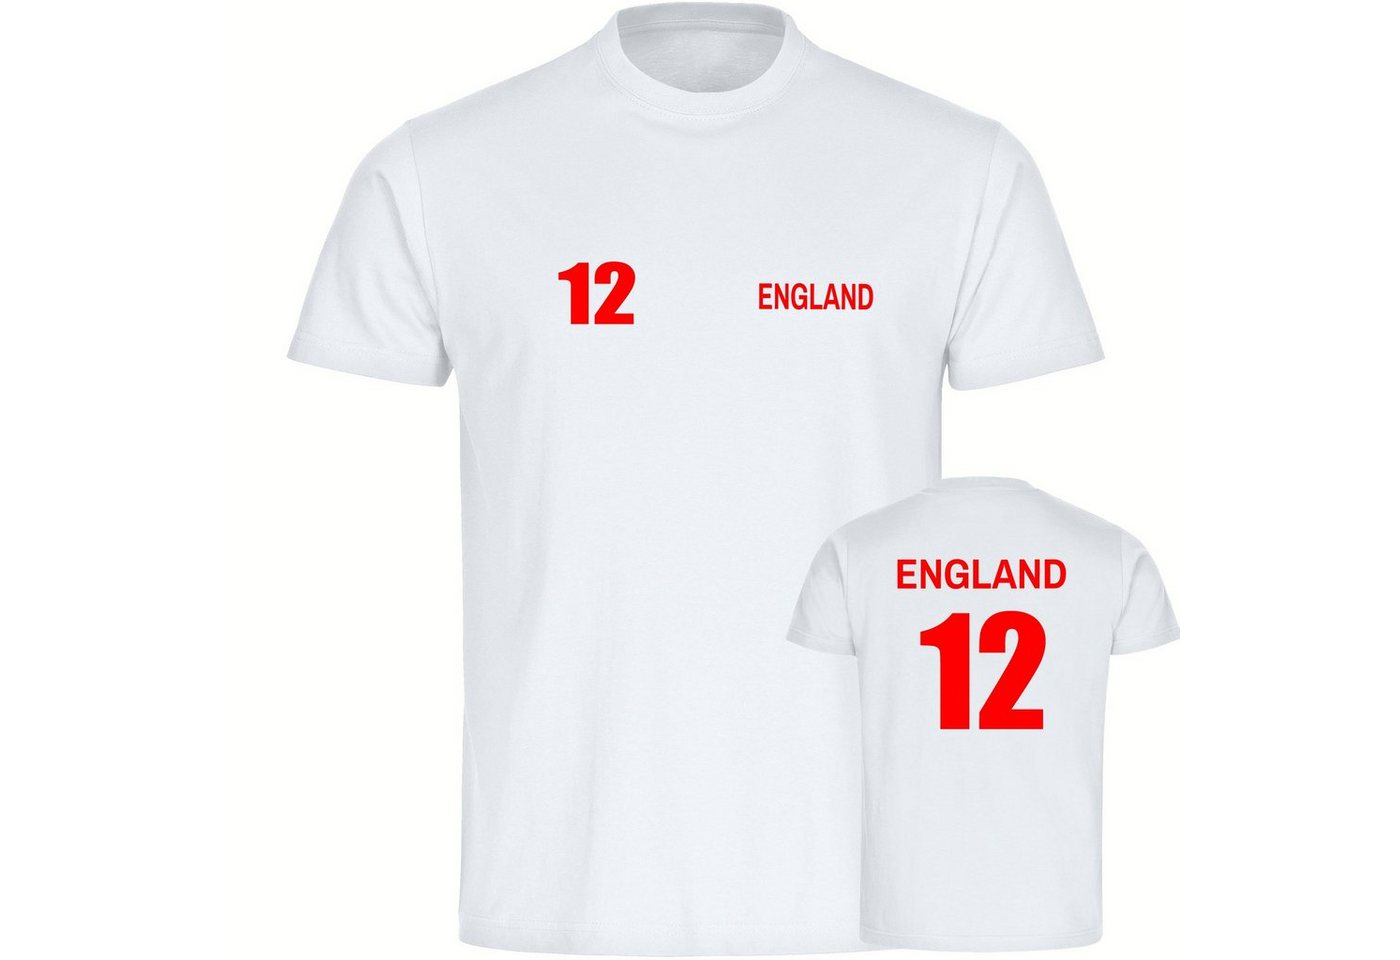 multifanshop T-Shirt Kinder England - Trikot 12 - Boy Girl von multifanshop